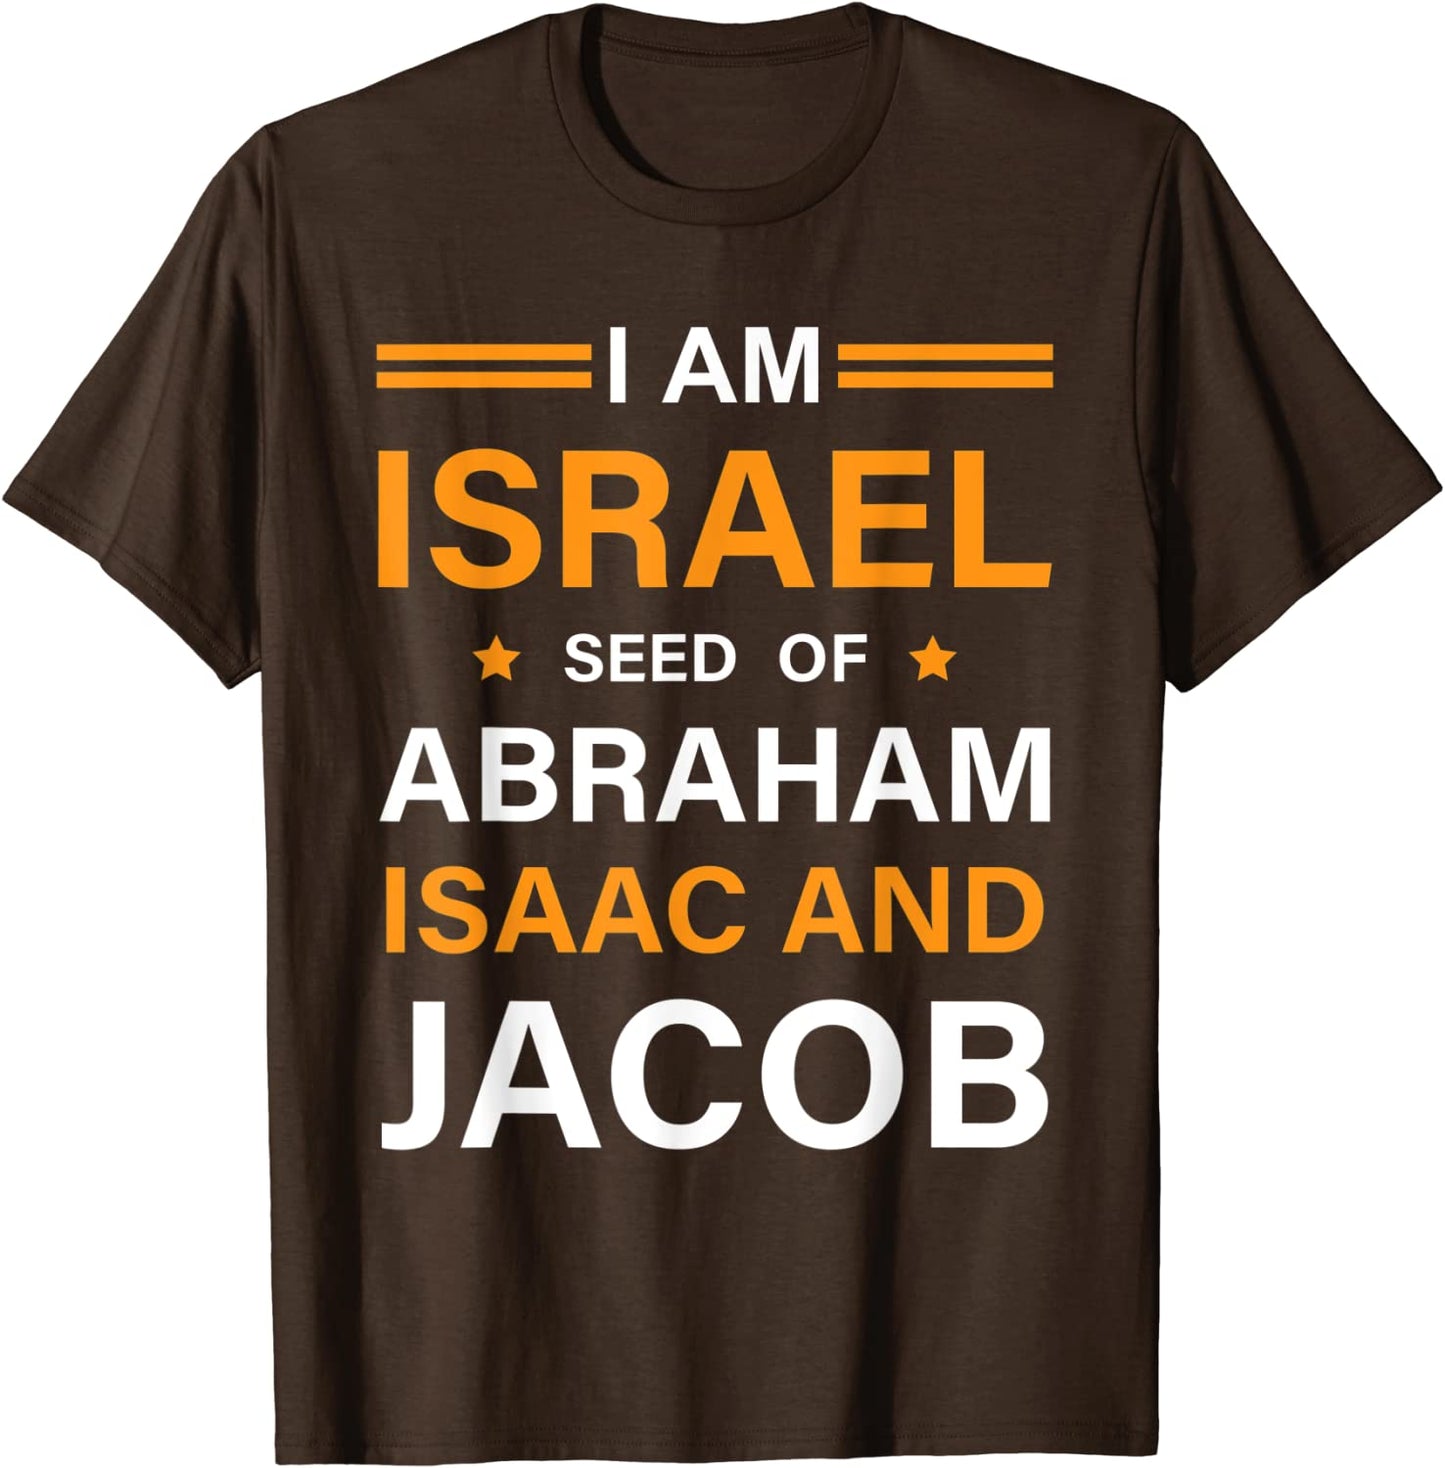 I am Israel T-Shirt